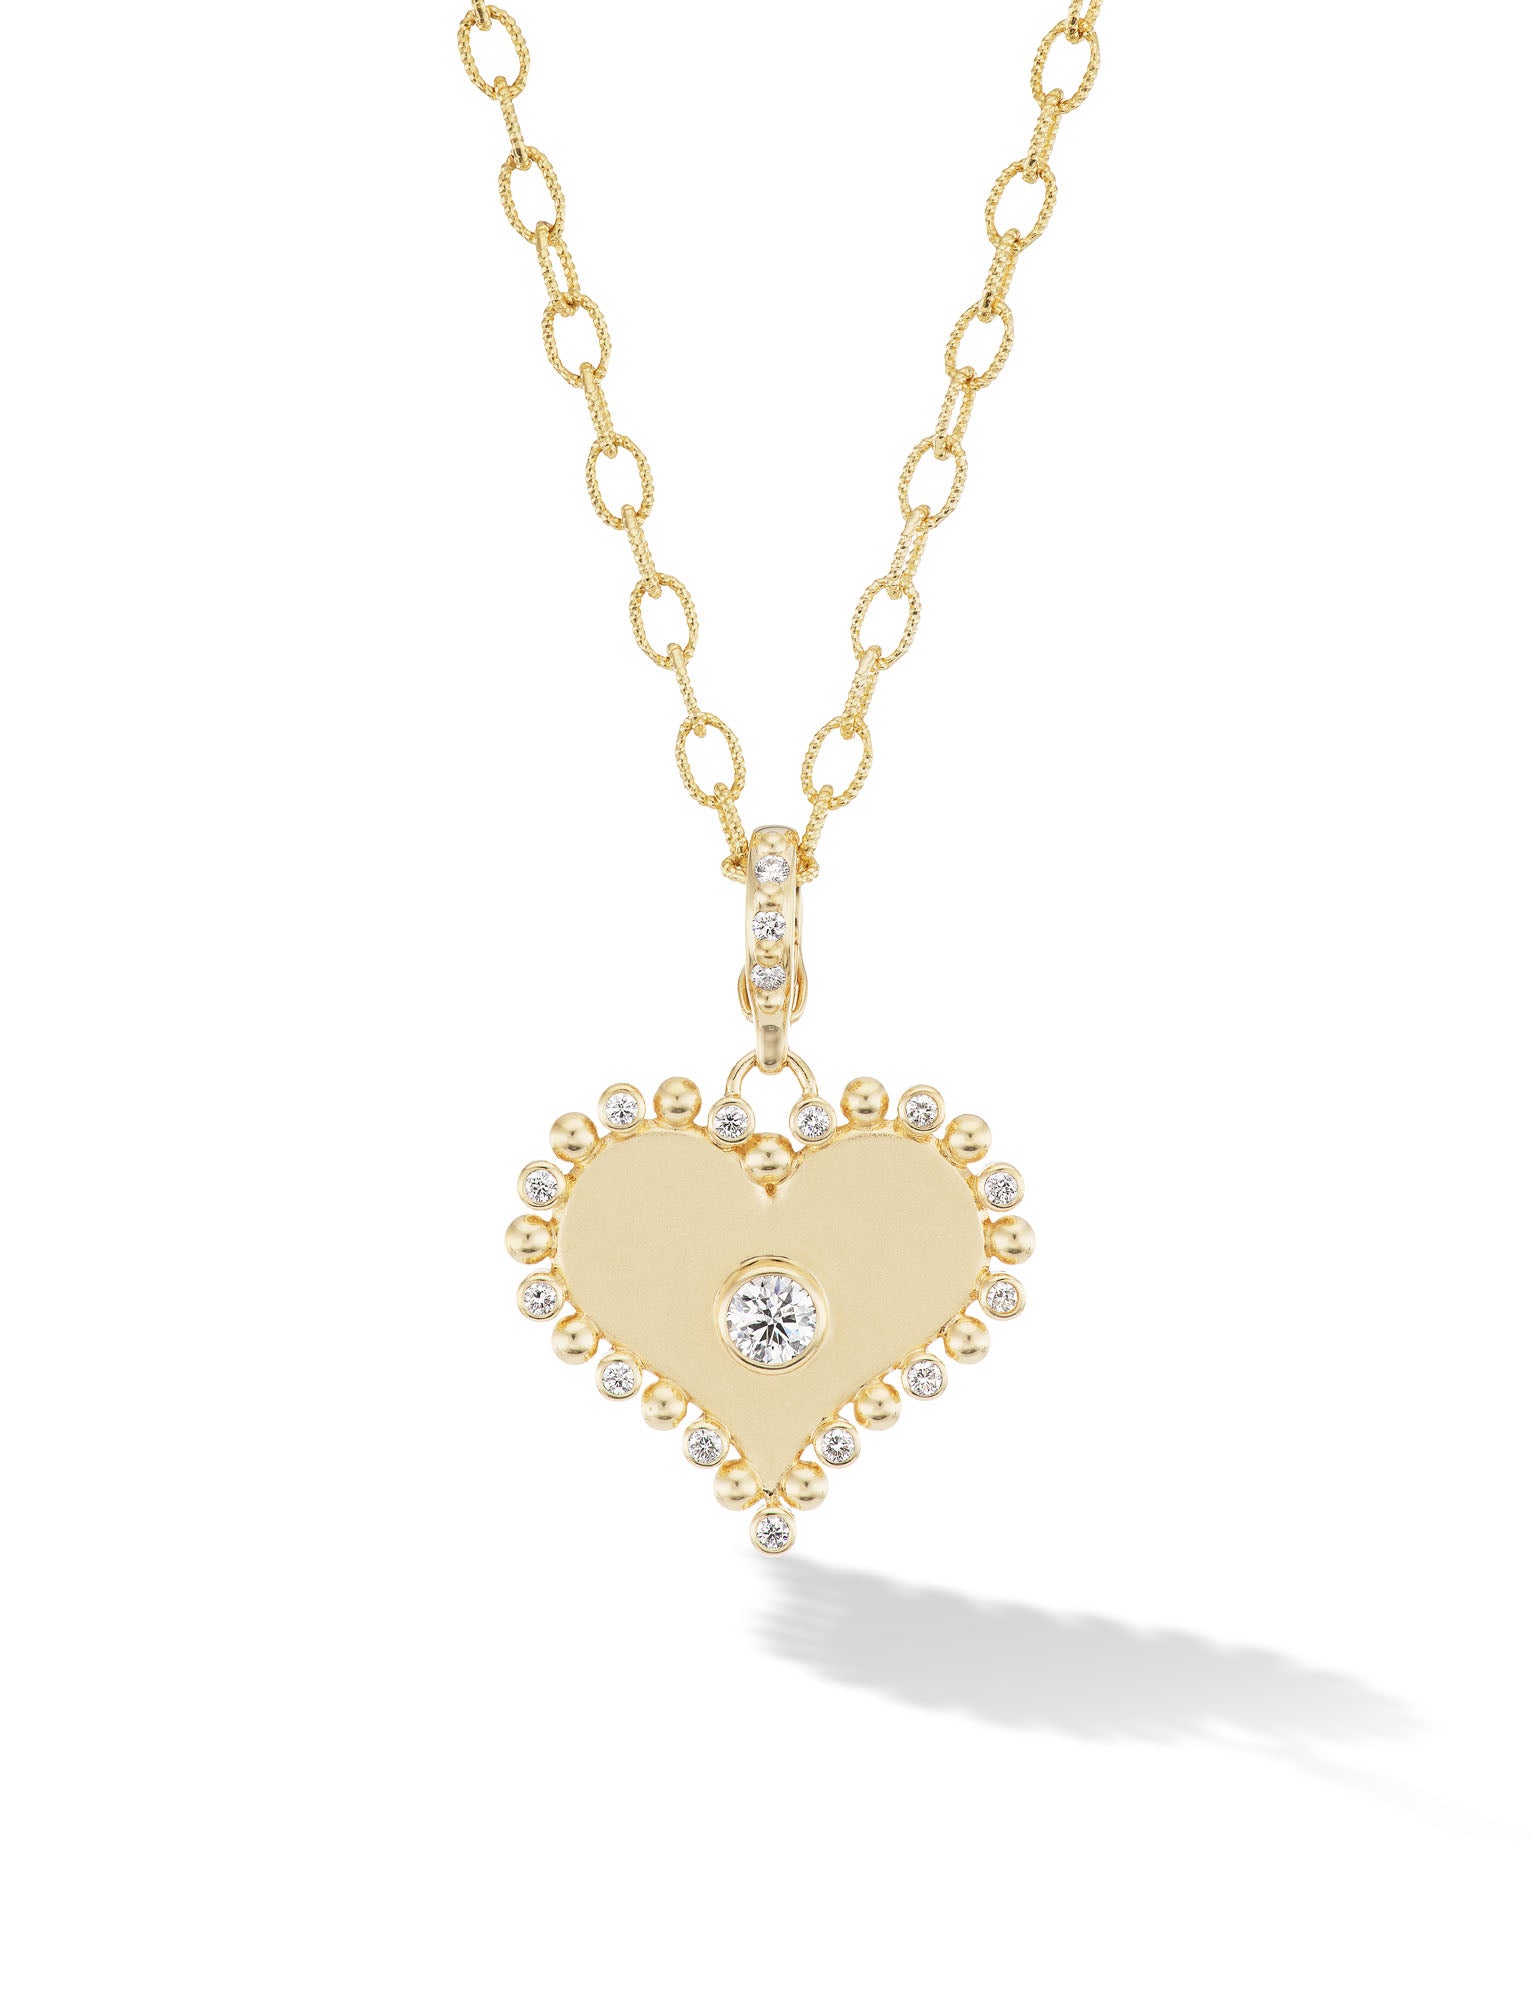 Gold Large Heart Pendant Necklace Black Cord Adjustable 90s | eBay